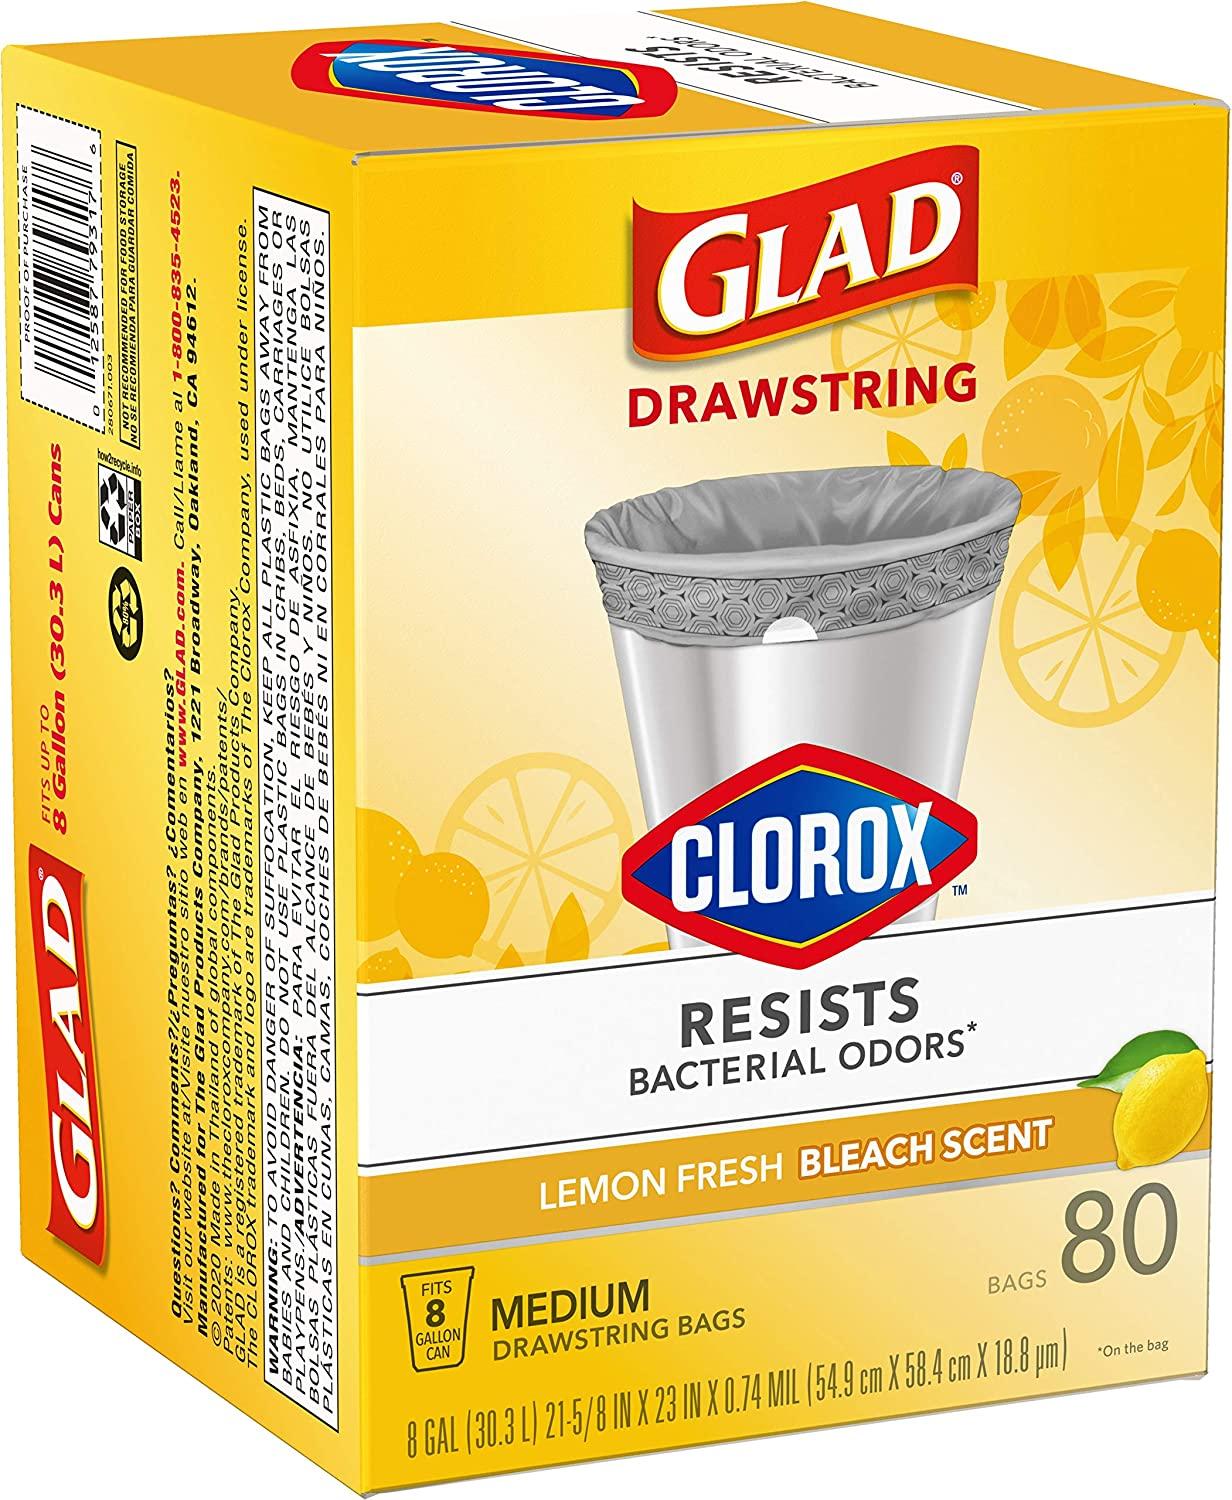 Save on Glad Clorox Lemon Fresh Bleach Scent Medium Drawstring Bags 8 Gallon  Order Online Delivery